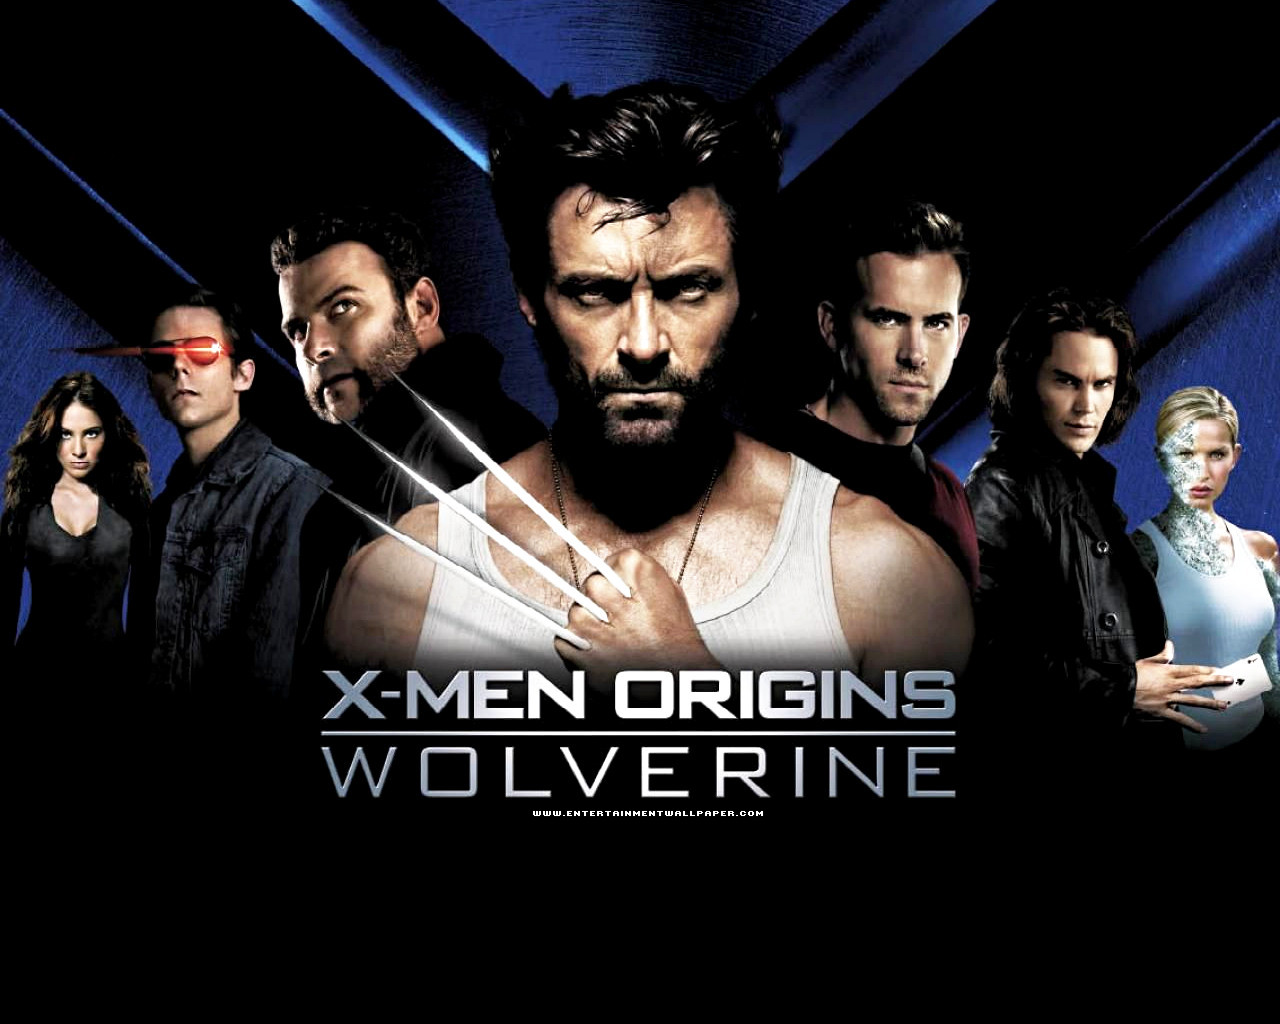 X Men Origins - X Men Origins Wolverine 2009 Poster - HD Wallpaper 